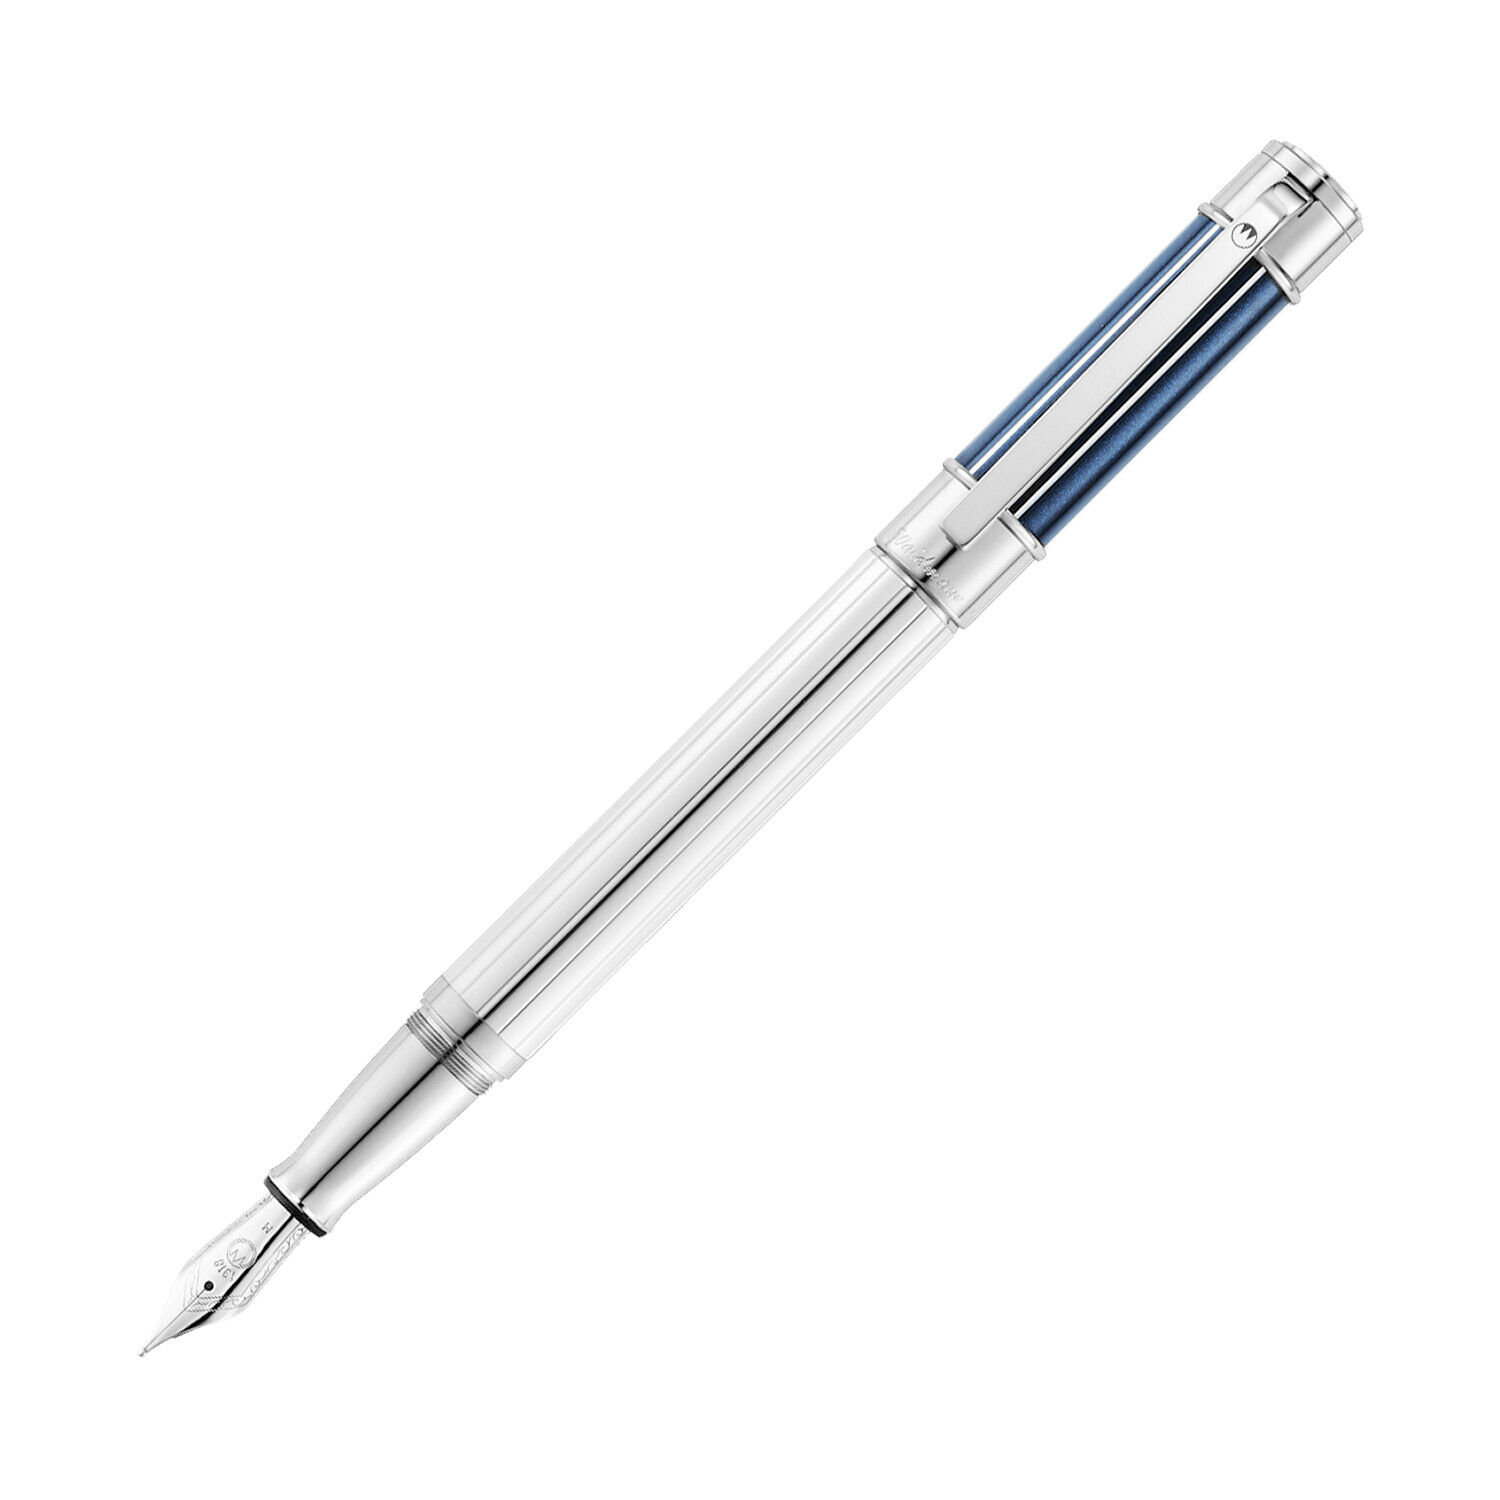 Waldmann Commander 23 Fountain Pen in Sterling Silver and Blue Lacquer, Fine